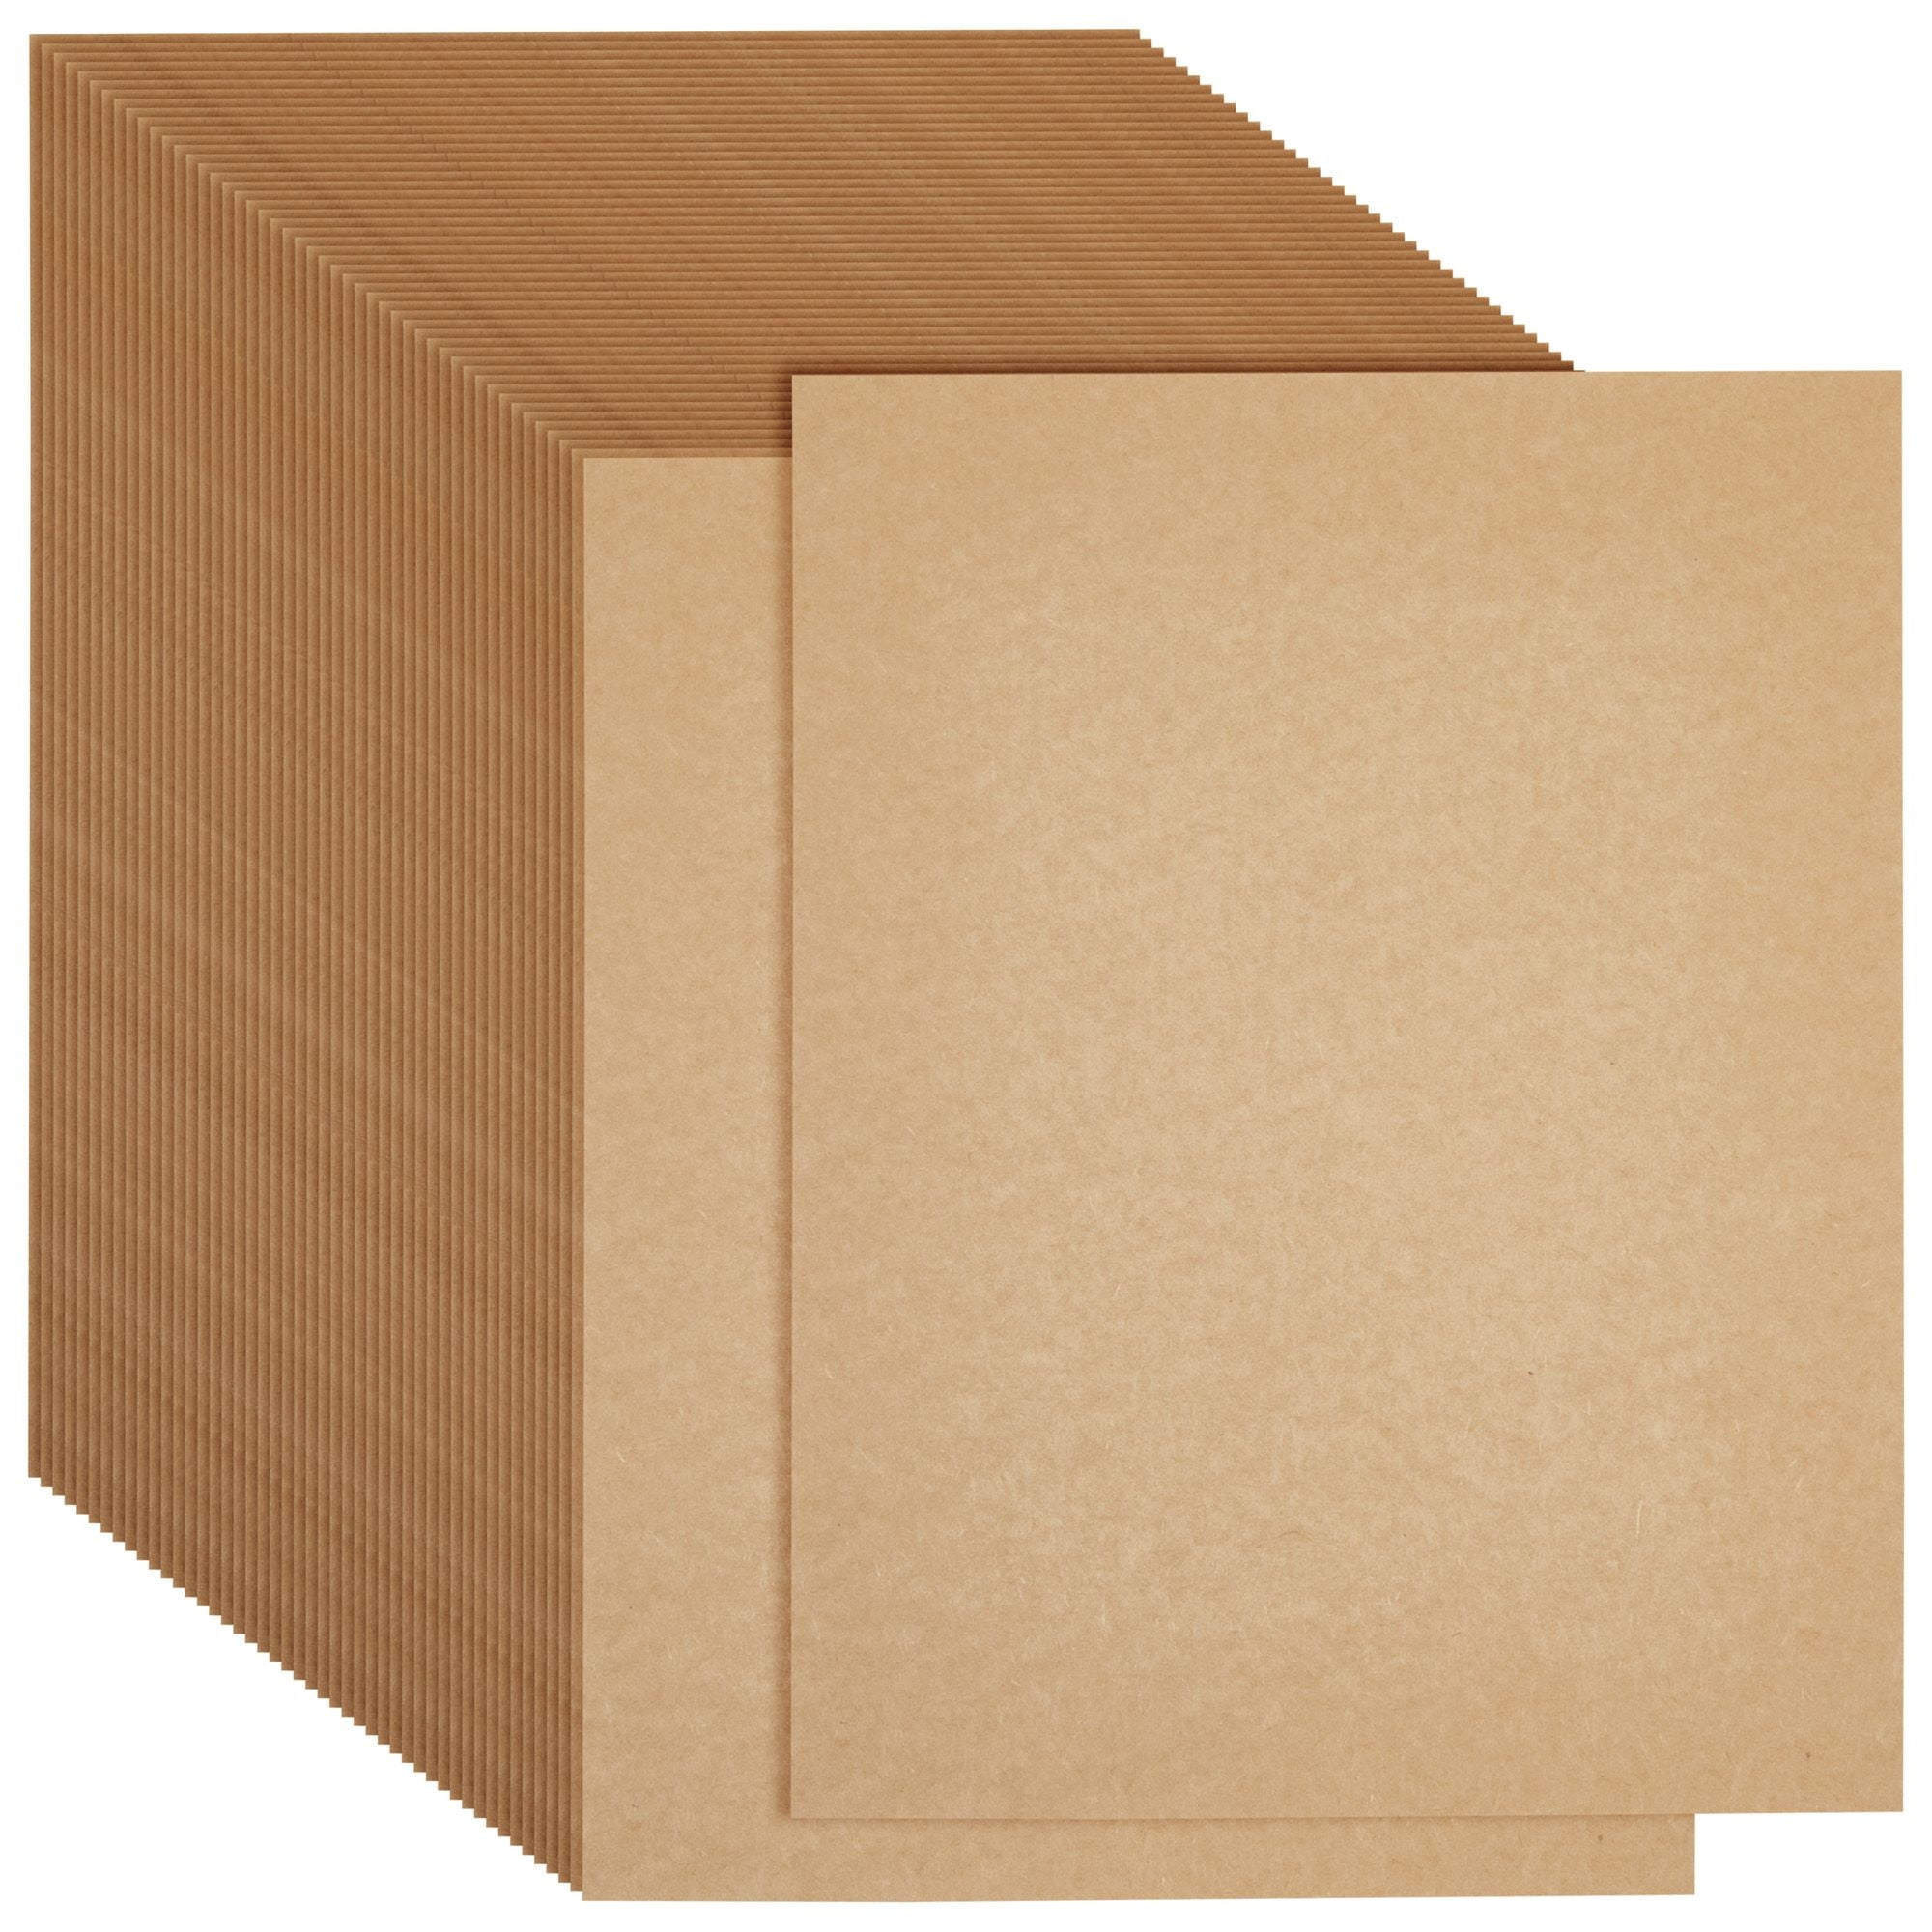  Twavang 25 Sheets Brown Cardstock Paper 8.5'' x 11